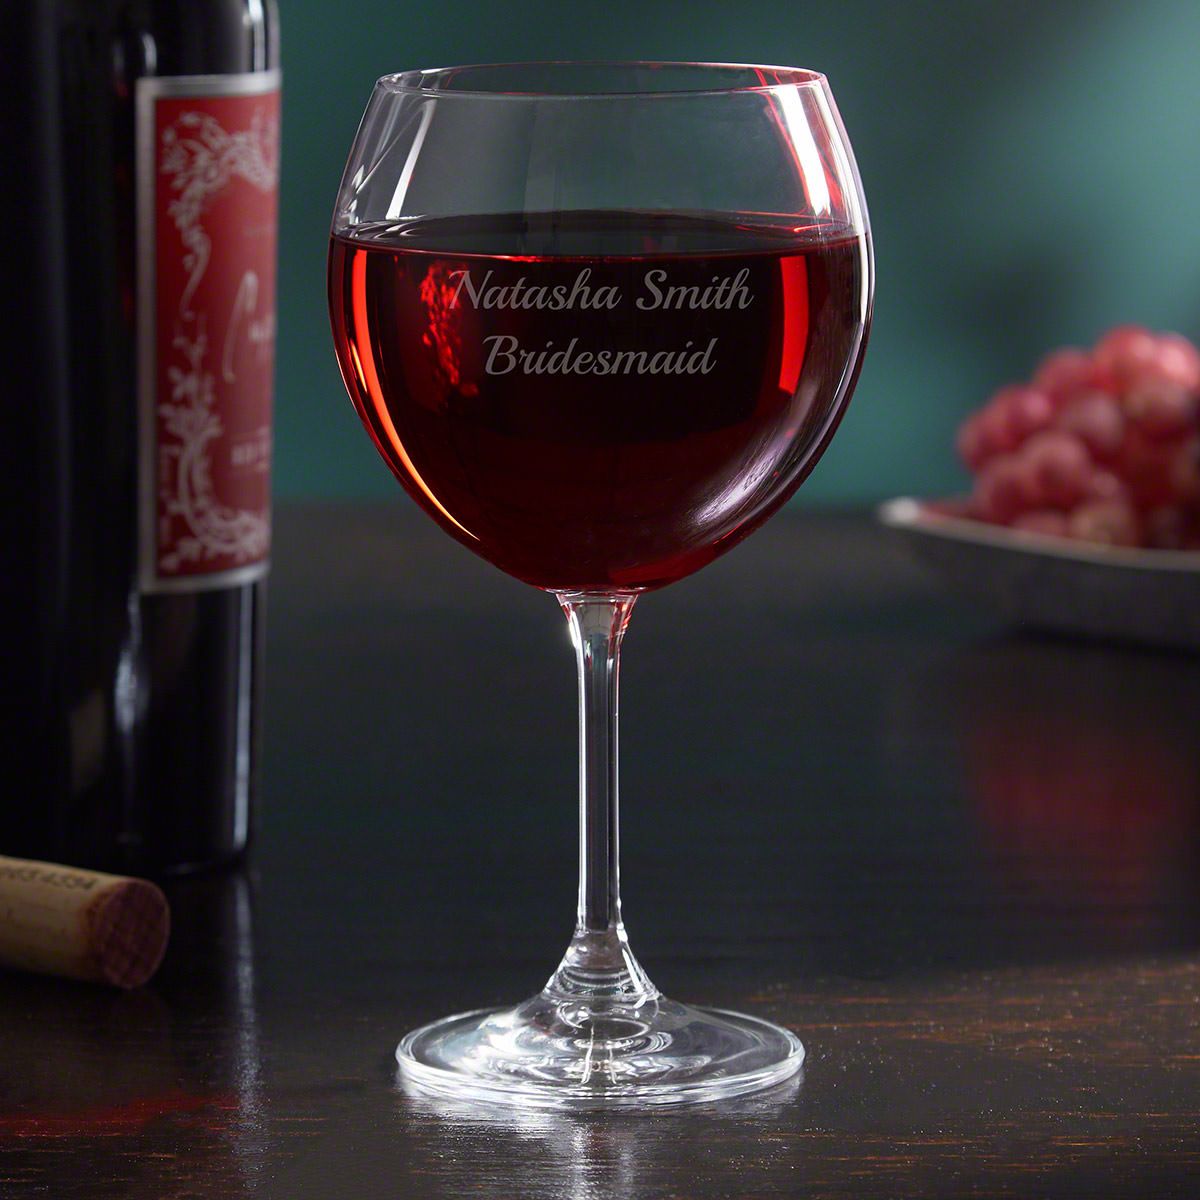 Personalized Red Wine Glass - 19oz